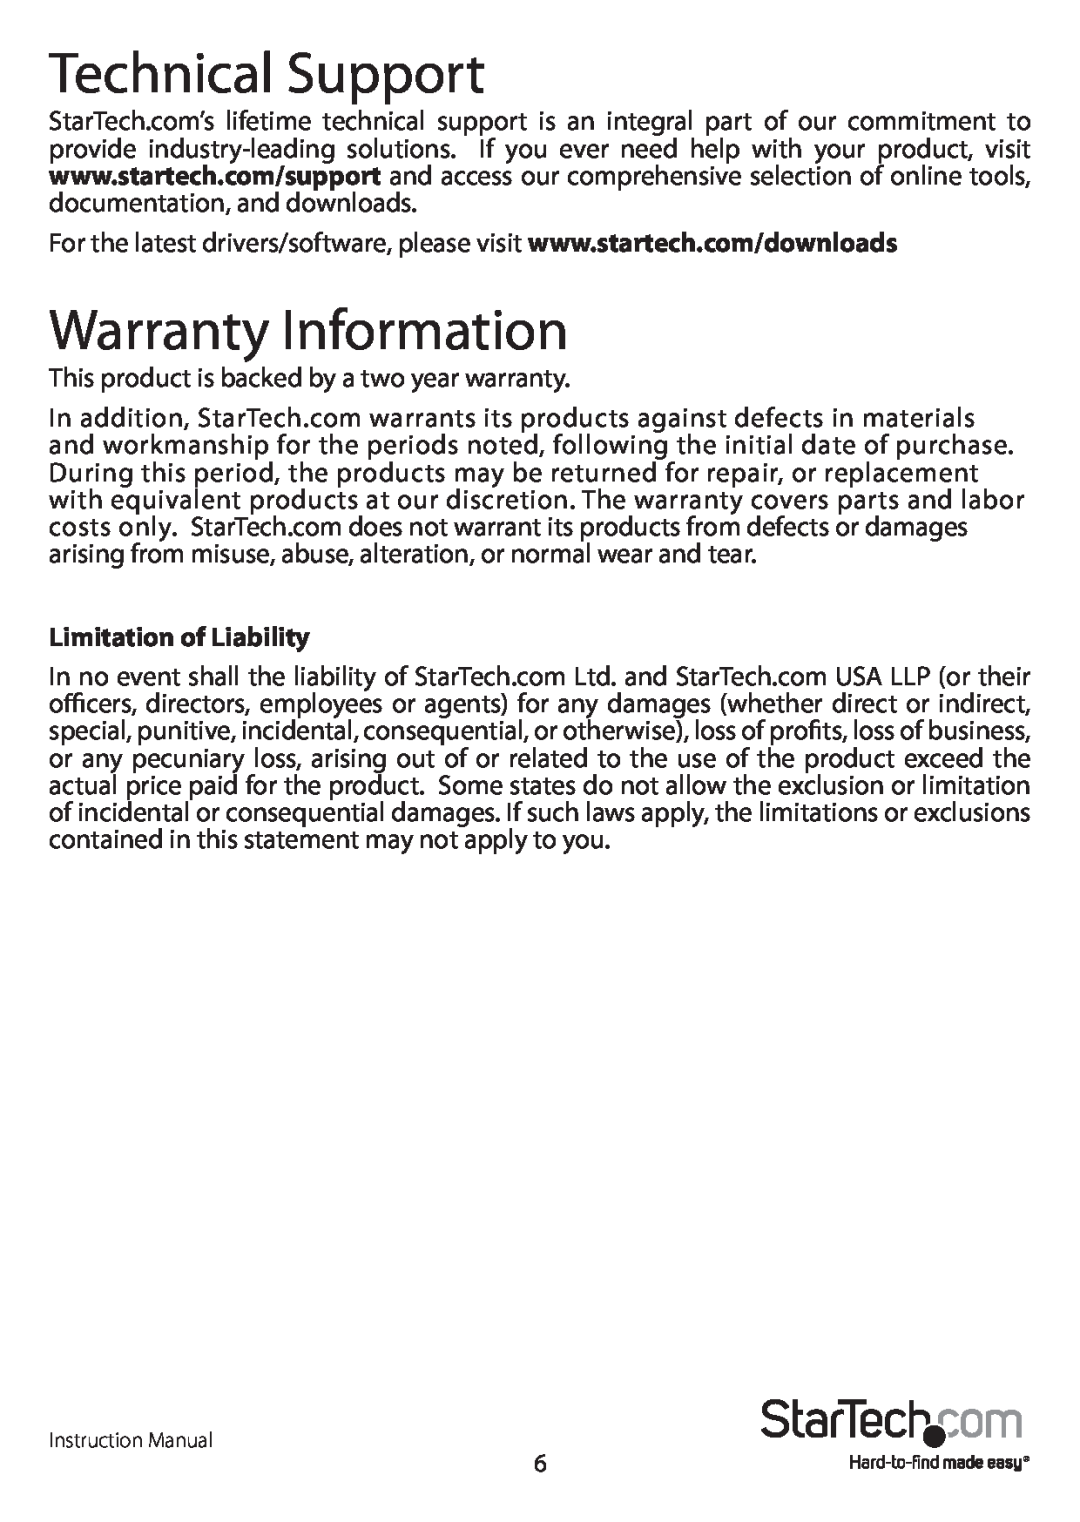 StarTech.com drw150sasbk manual Technical Support, Warranty Information, Limitation of Liability 